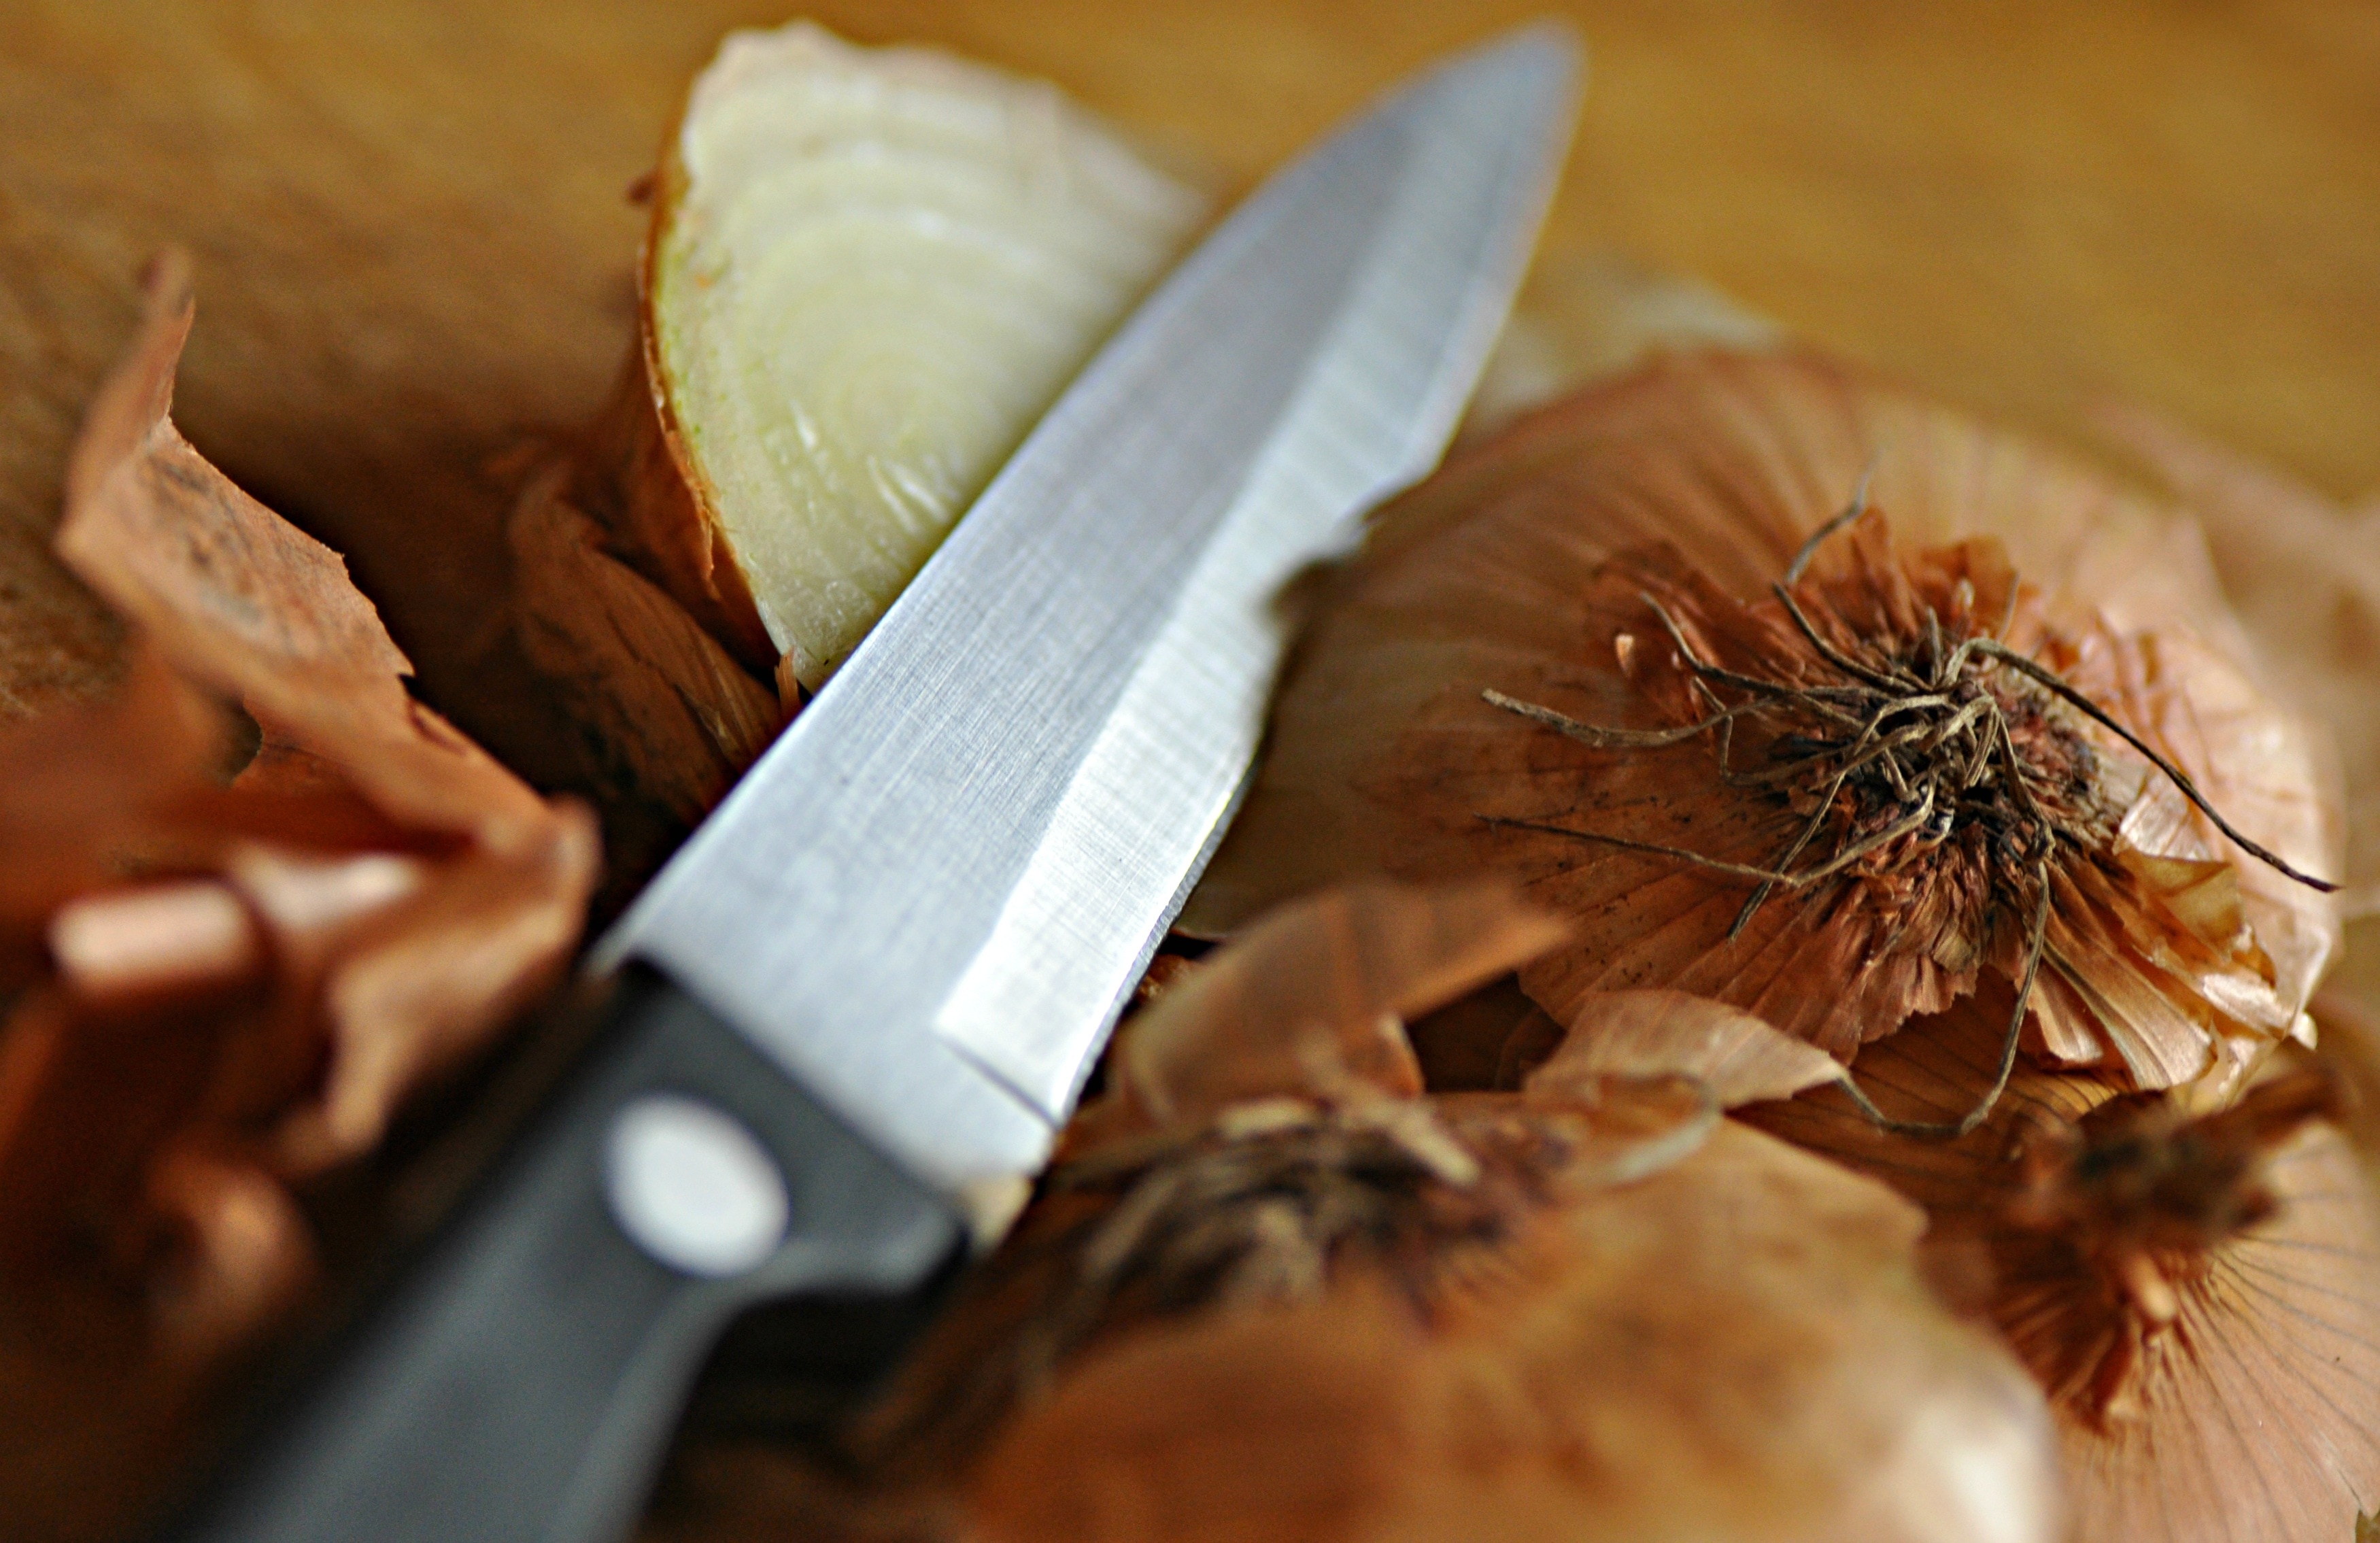 black handled knife and onion